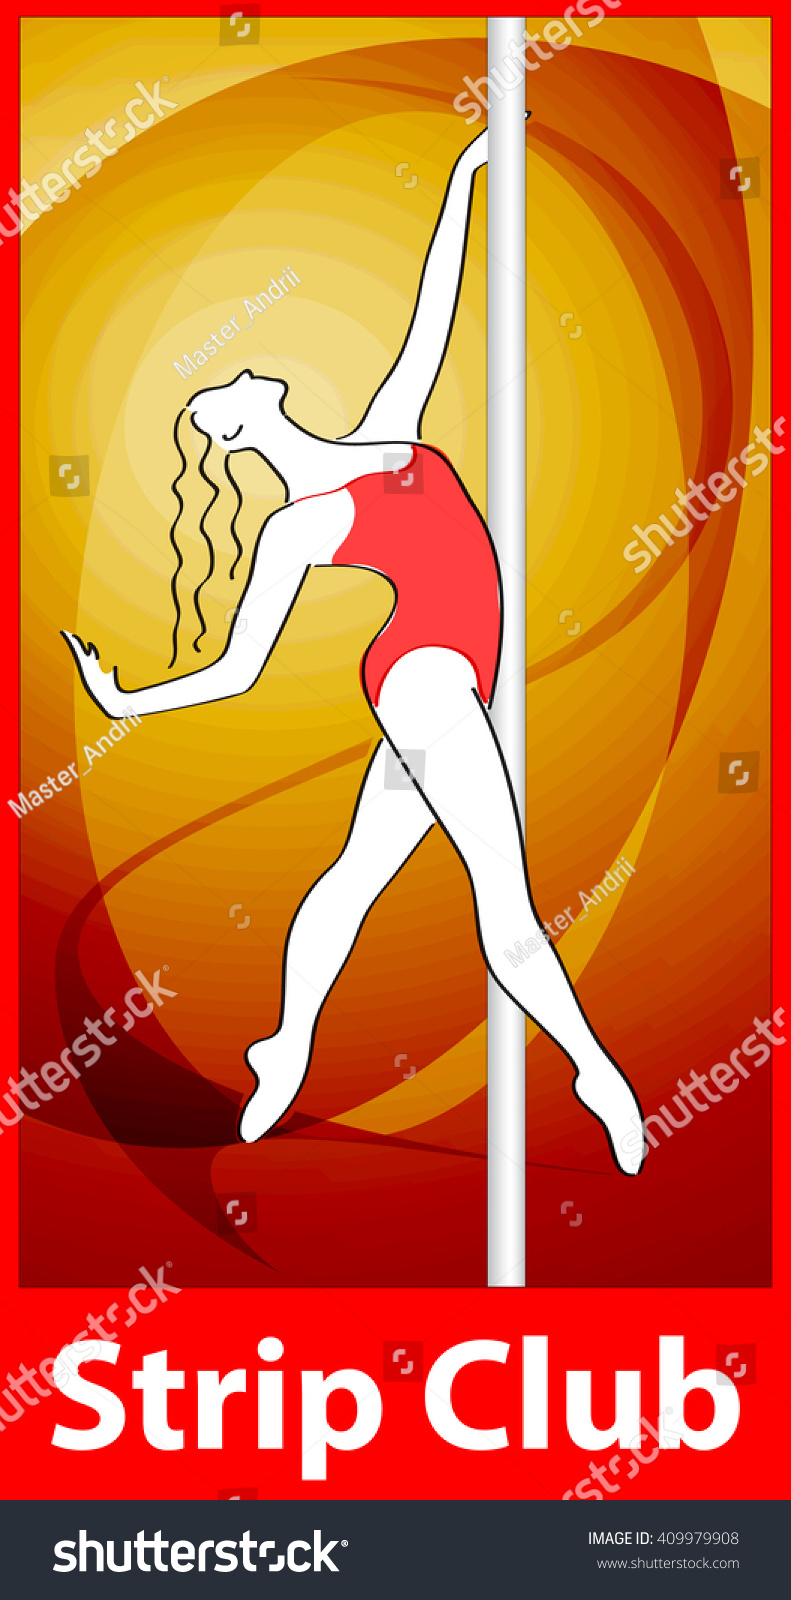 Woman Dancing Striptease Strip Club Vector Stock Vector Royalty Free 409979908 Shutterstock